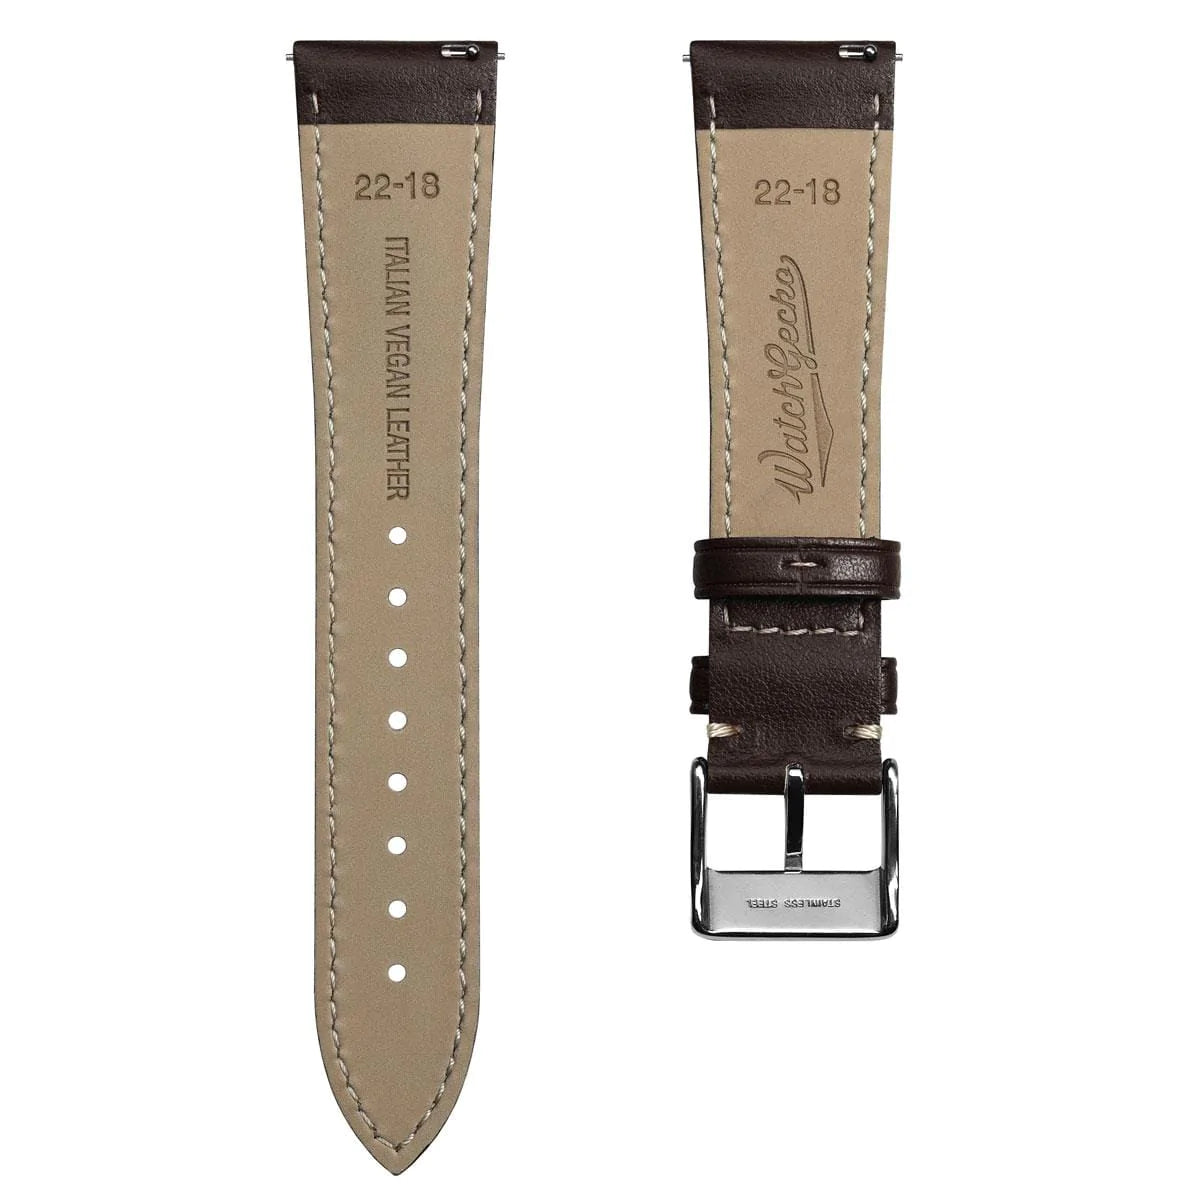 Vintage Highley Italian Vegan Leather Watch Strap - Hawthorn Brown